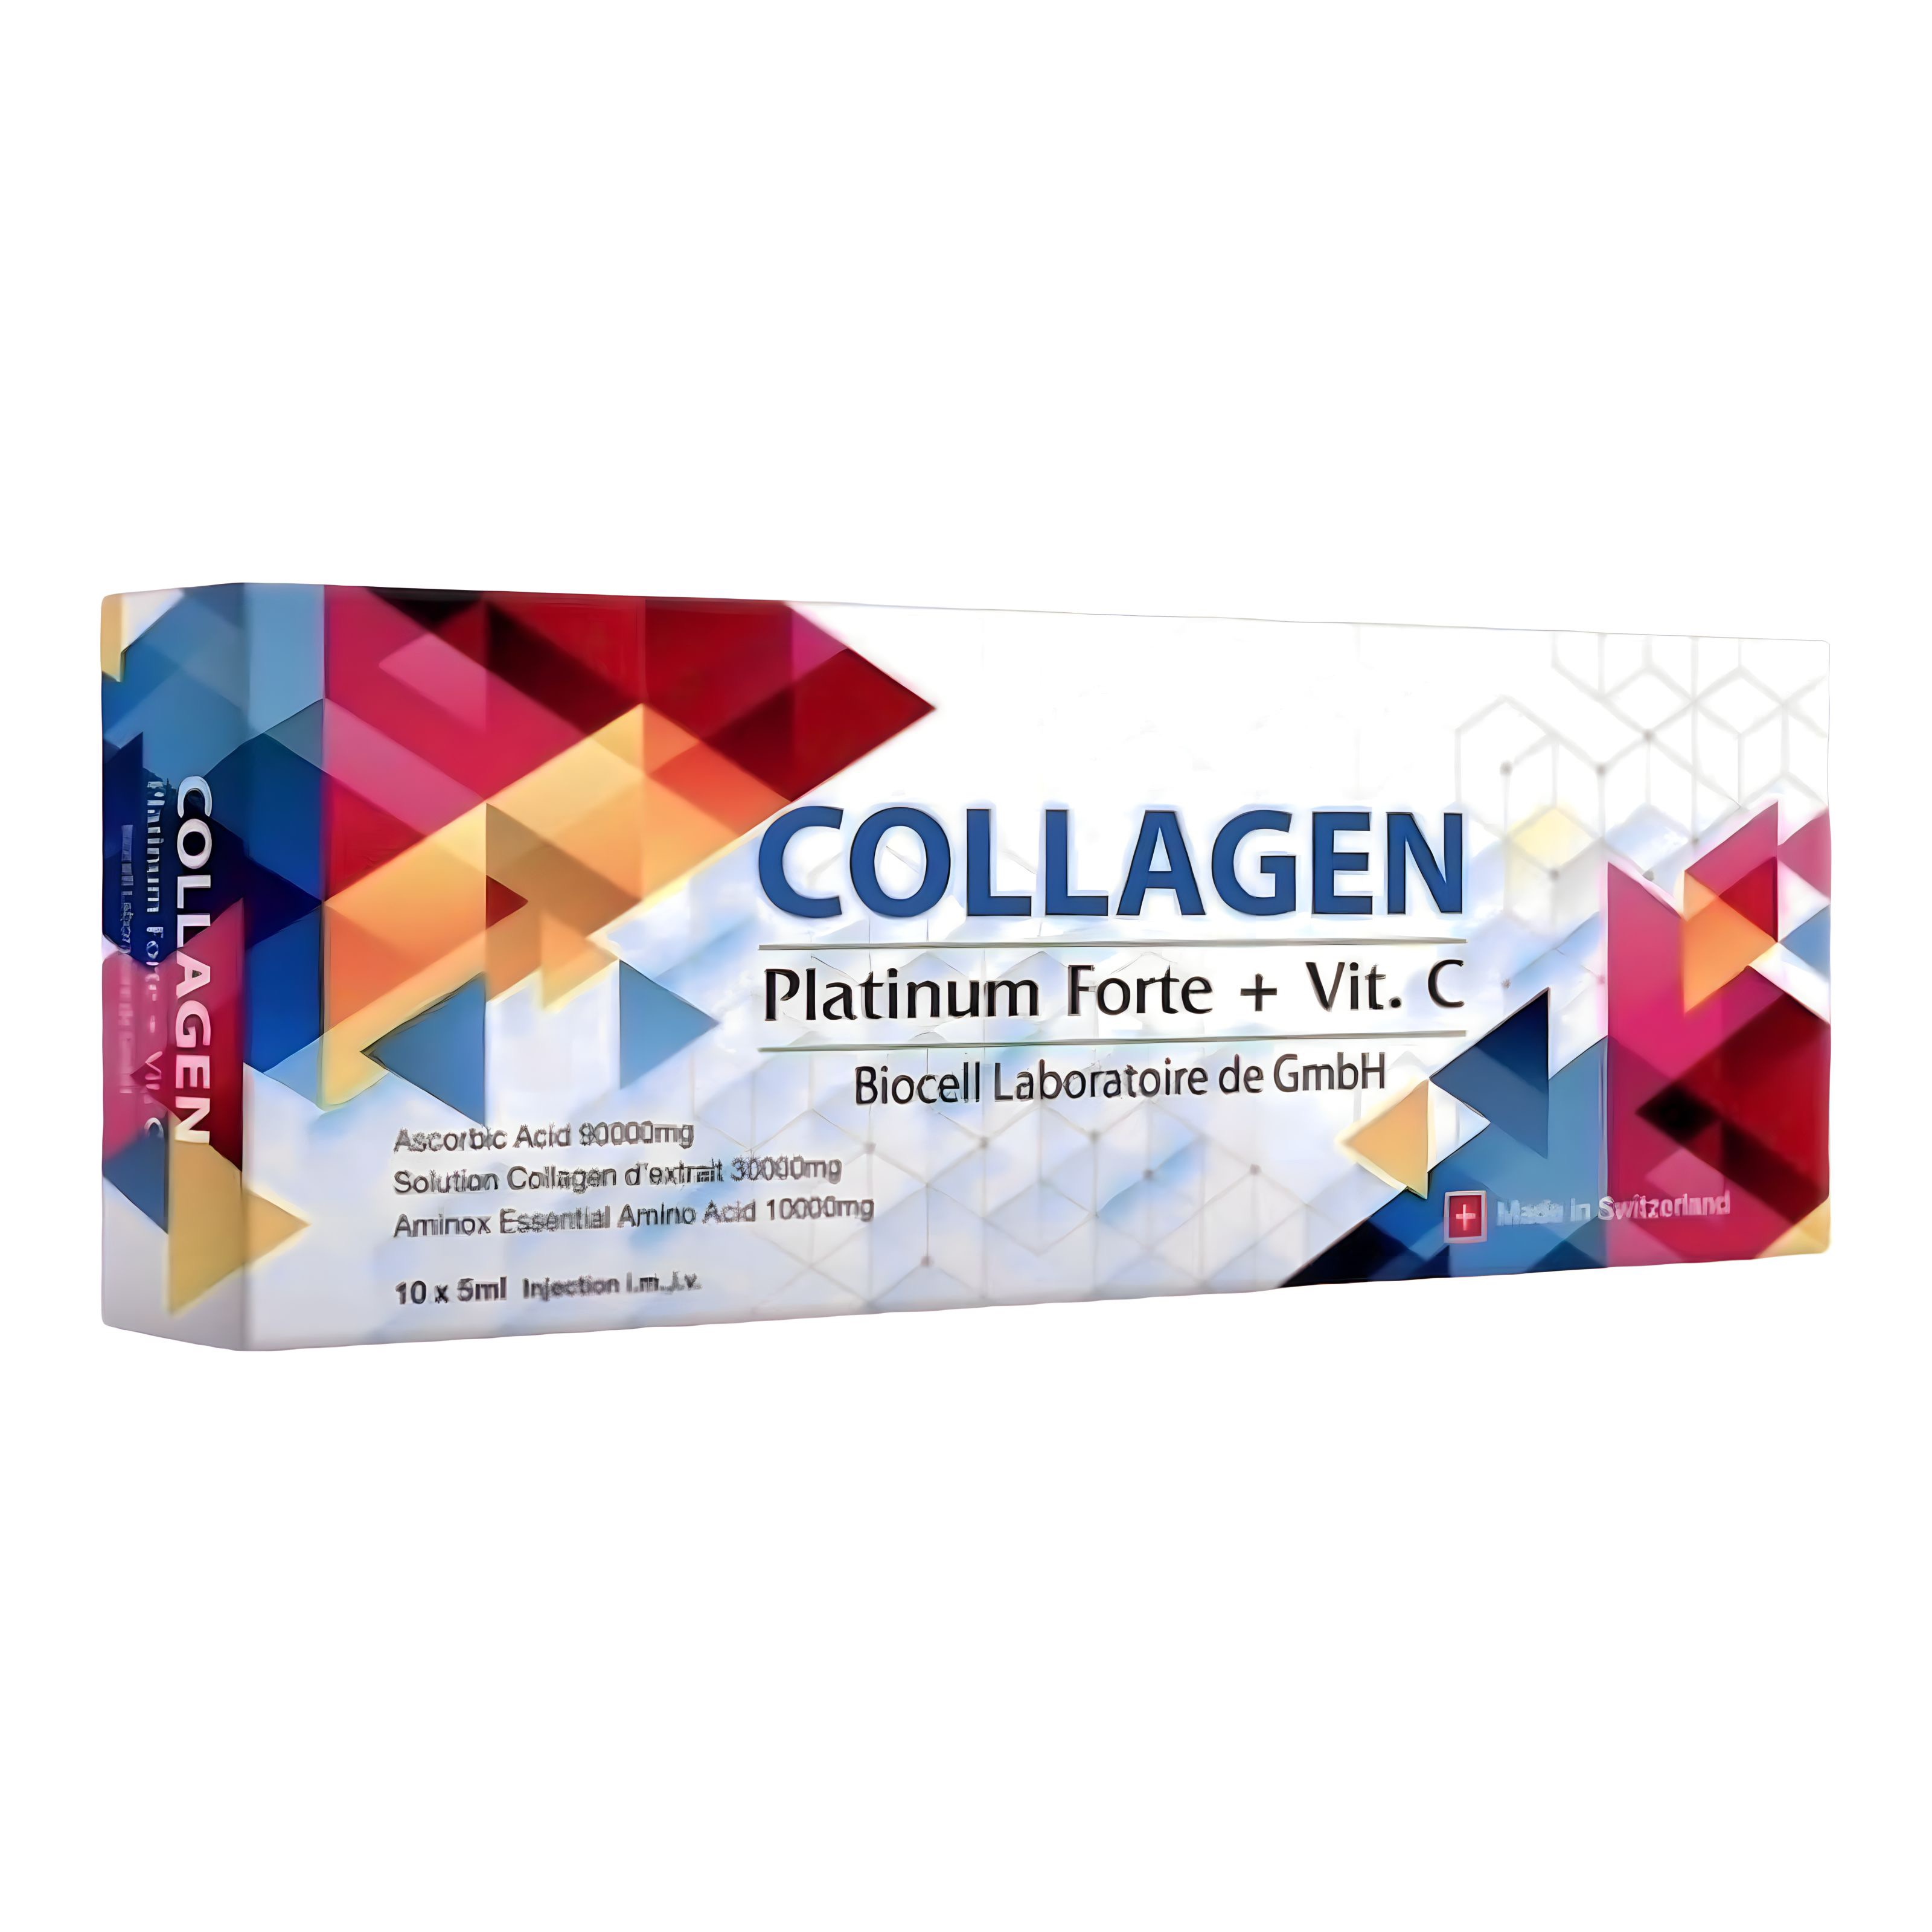 Collagen Platinium Forte+Vit C Biocell (Swiss)